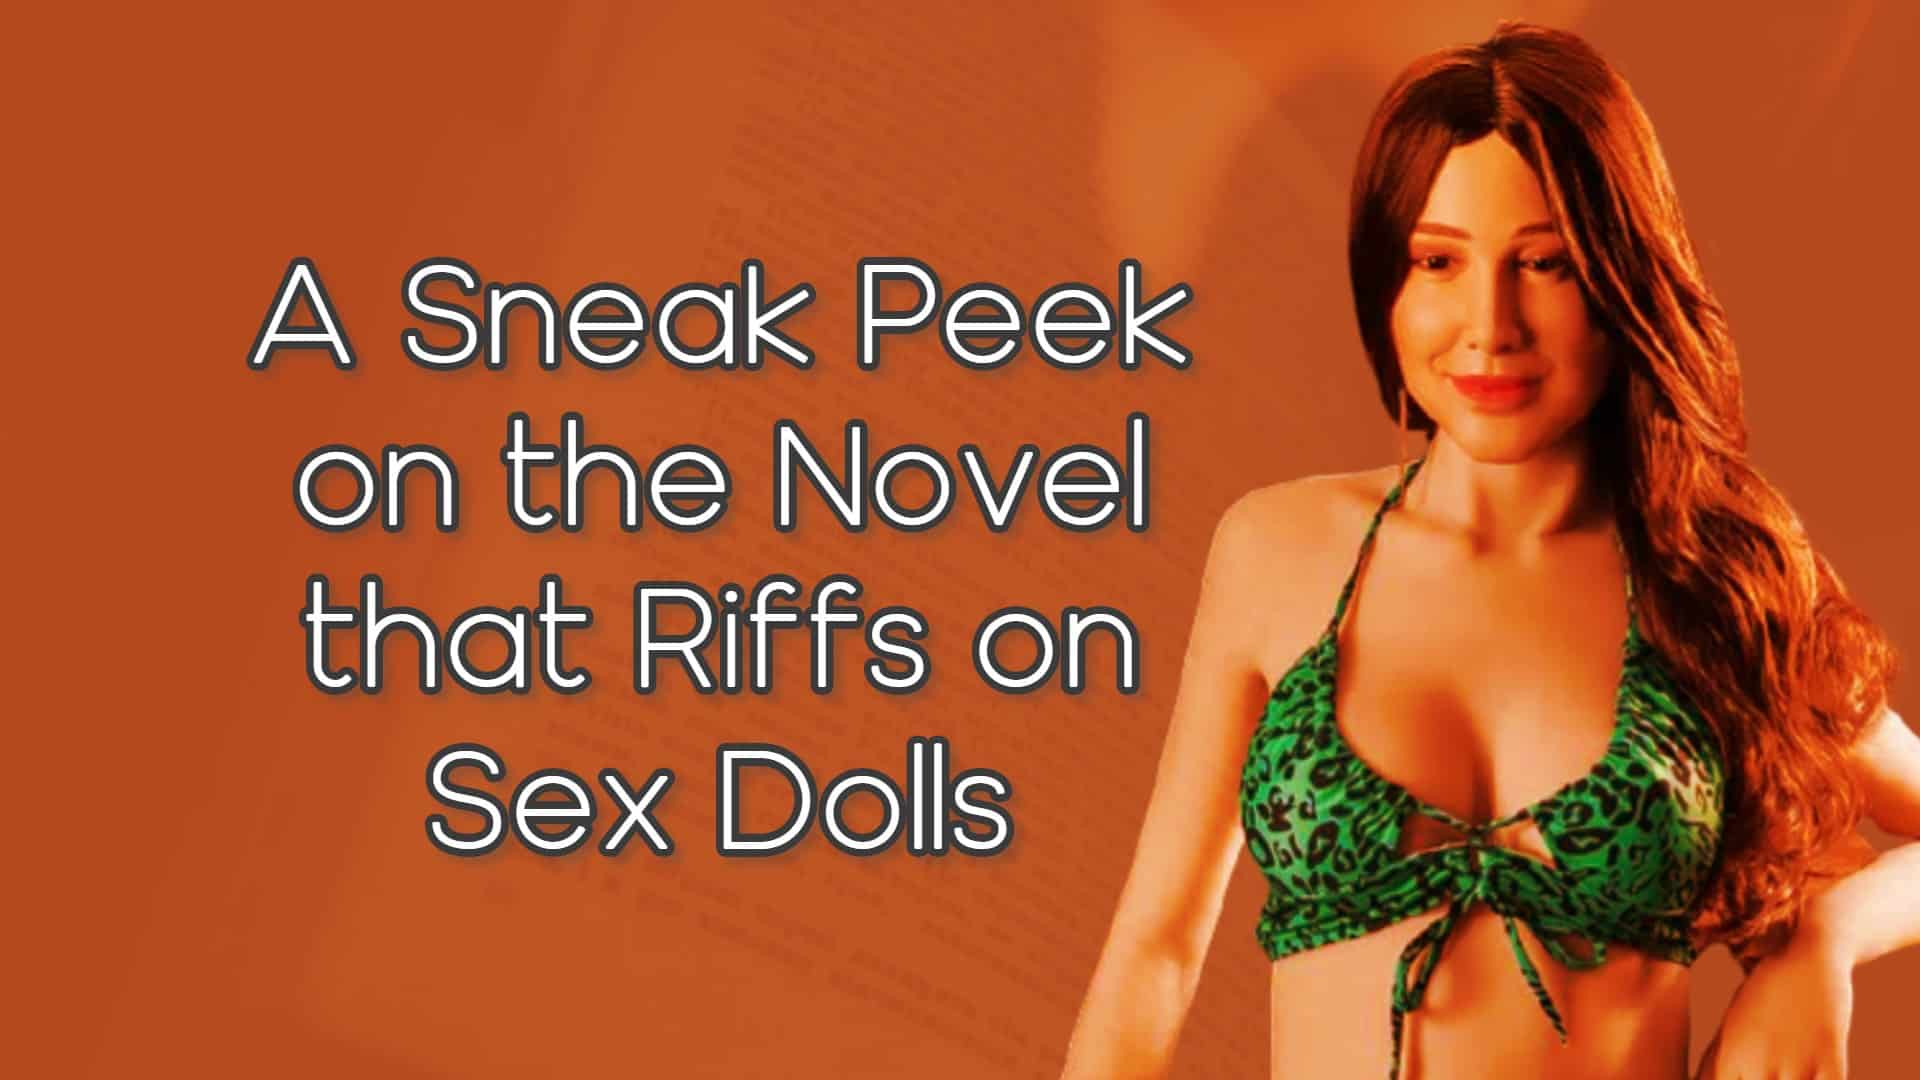 A Sneak Peek on the Novel that Riffs on Sex Dolls